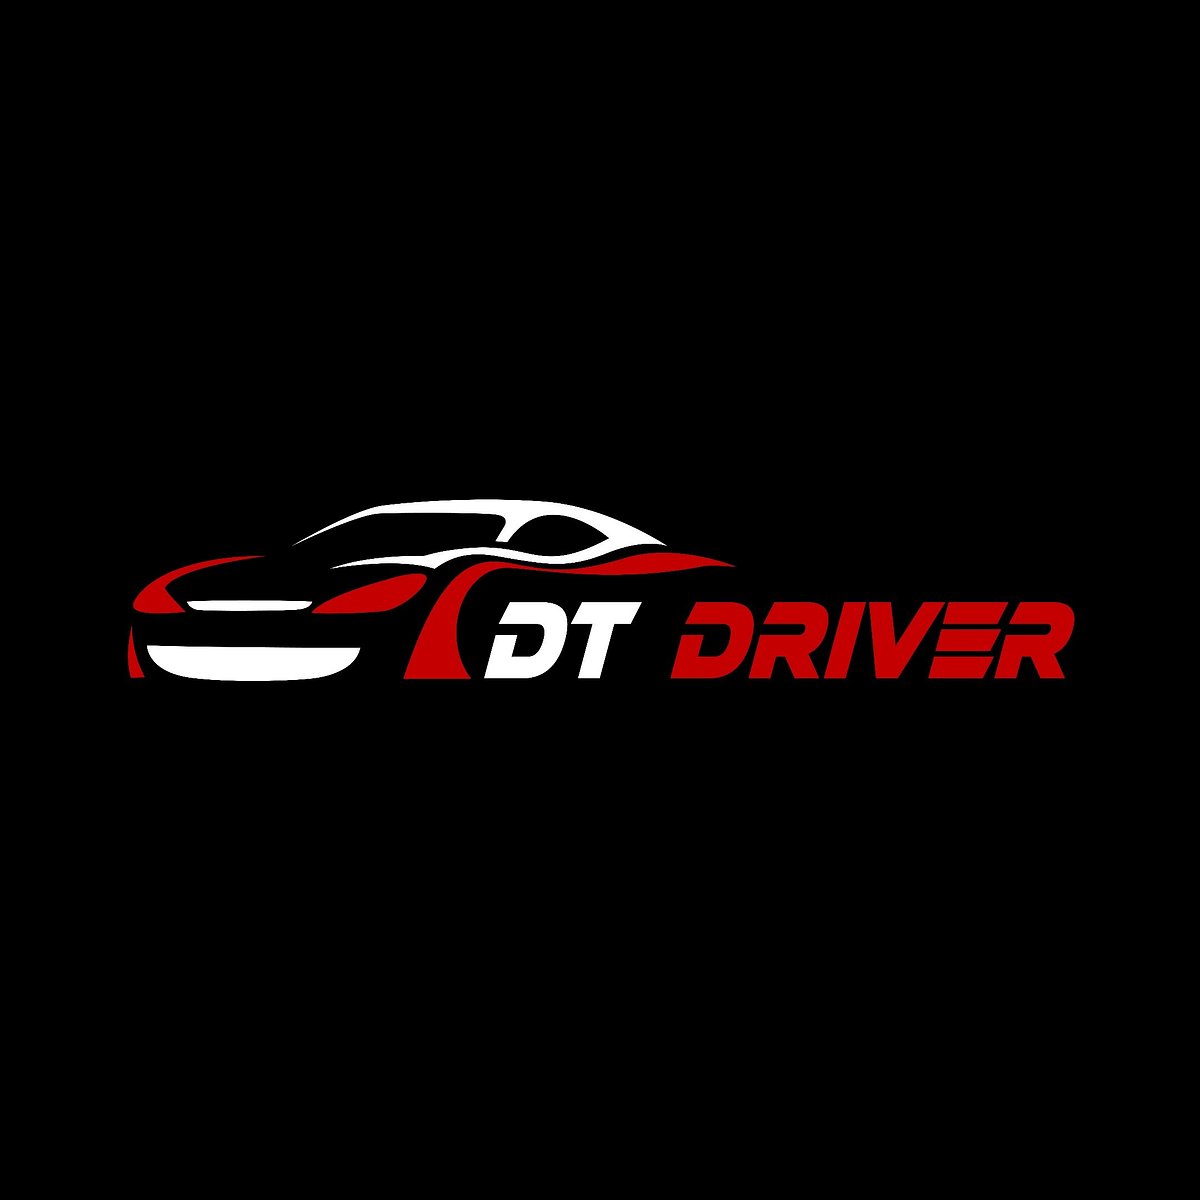 DT DRIVER (Paris, France): Address, - Tripadvisor